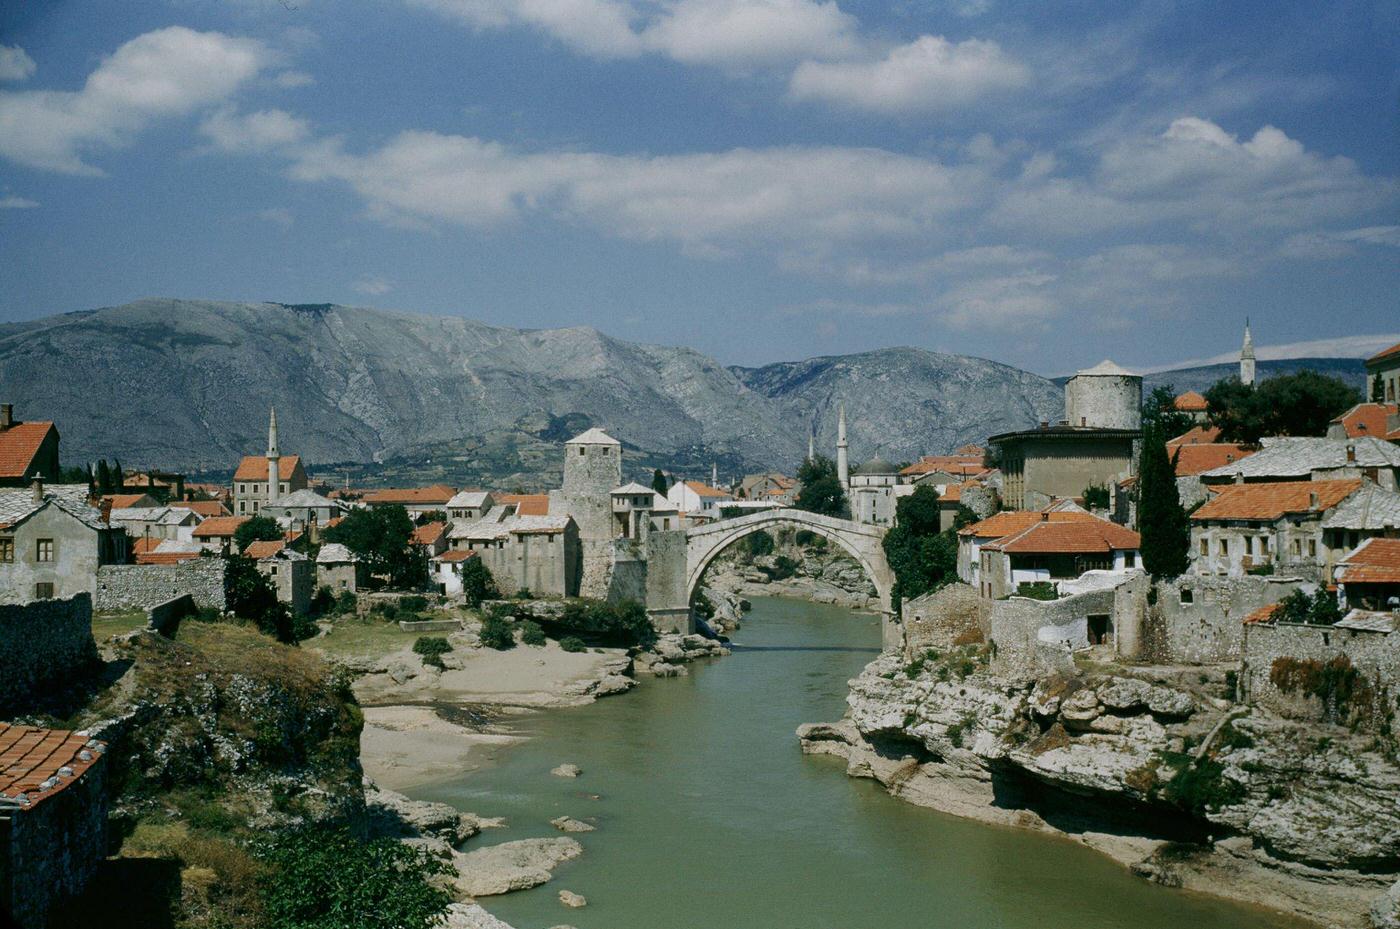 The Stari Most or Old Bridge, a 16th century Ottoman bridge over the River Neretva in Mostar, Bosnia and Herzegovina, 1965